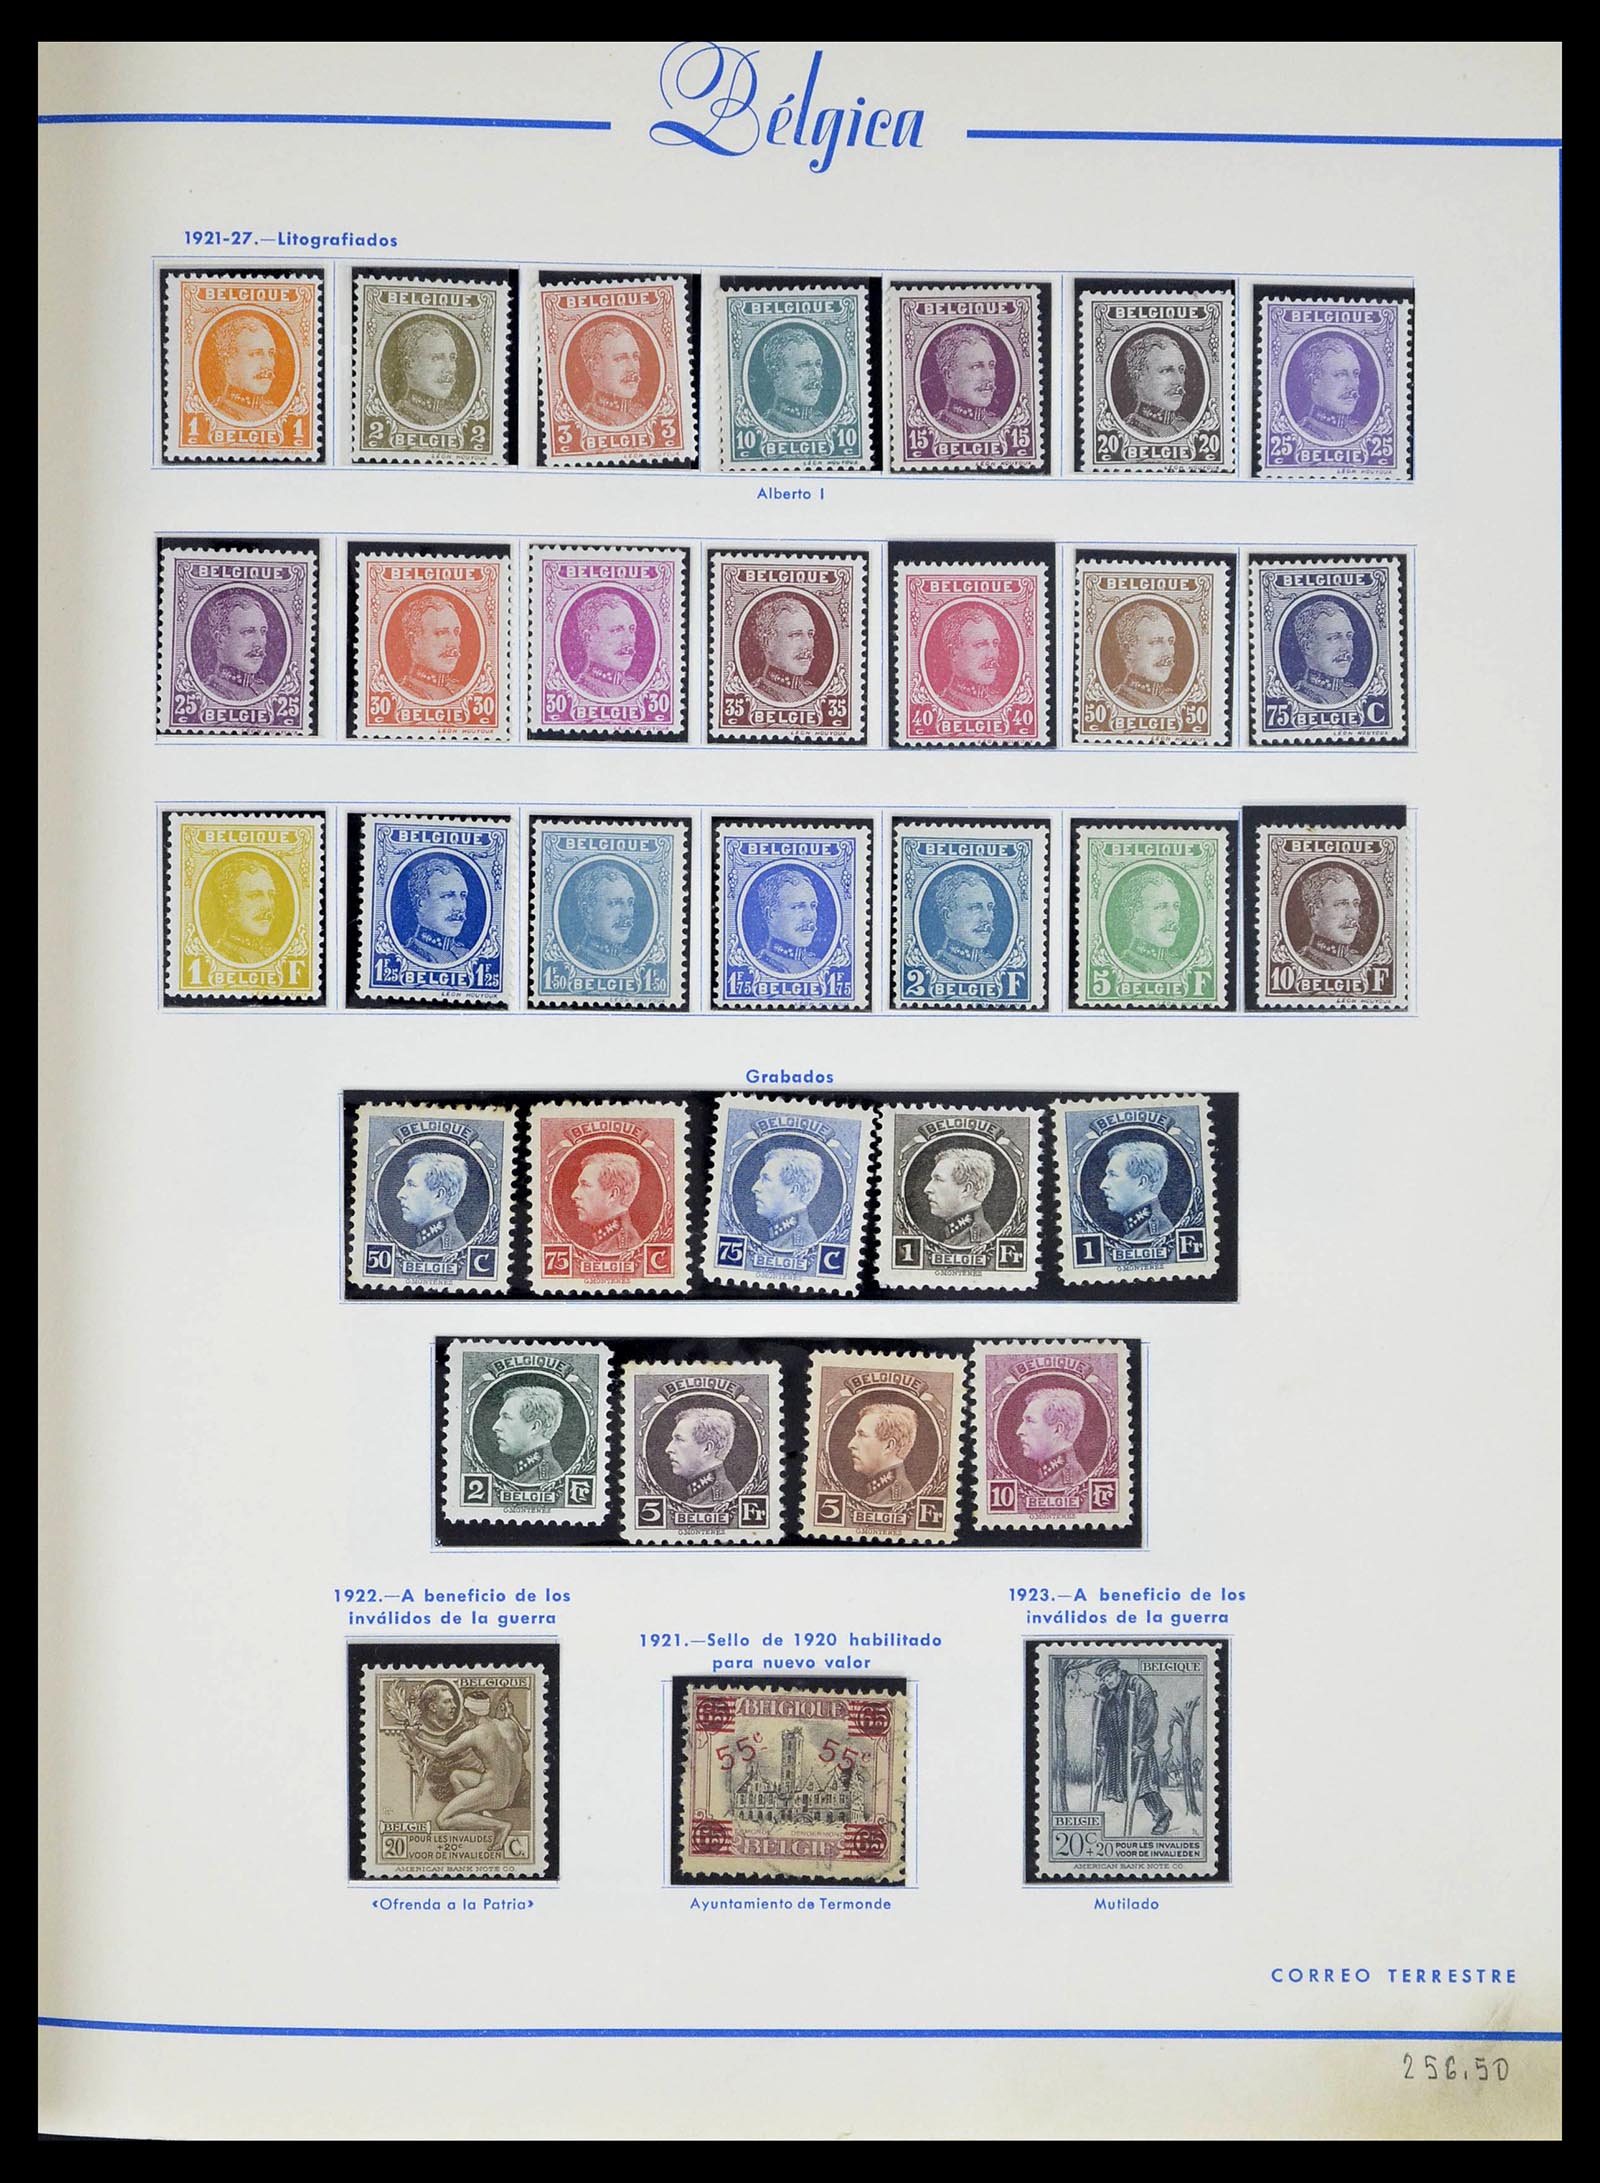 39230 0015 - Stamp collection 39230 Belgium 1849-1976.